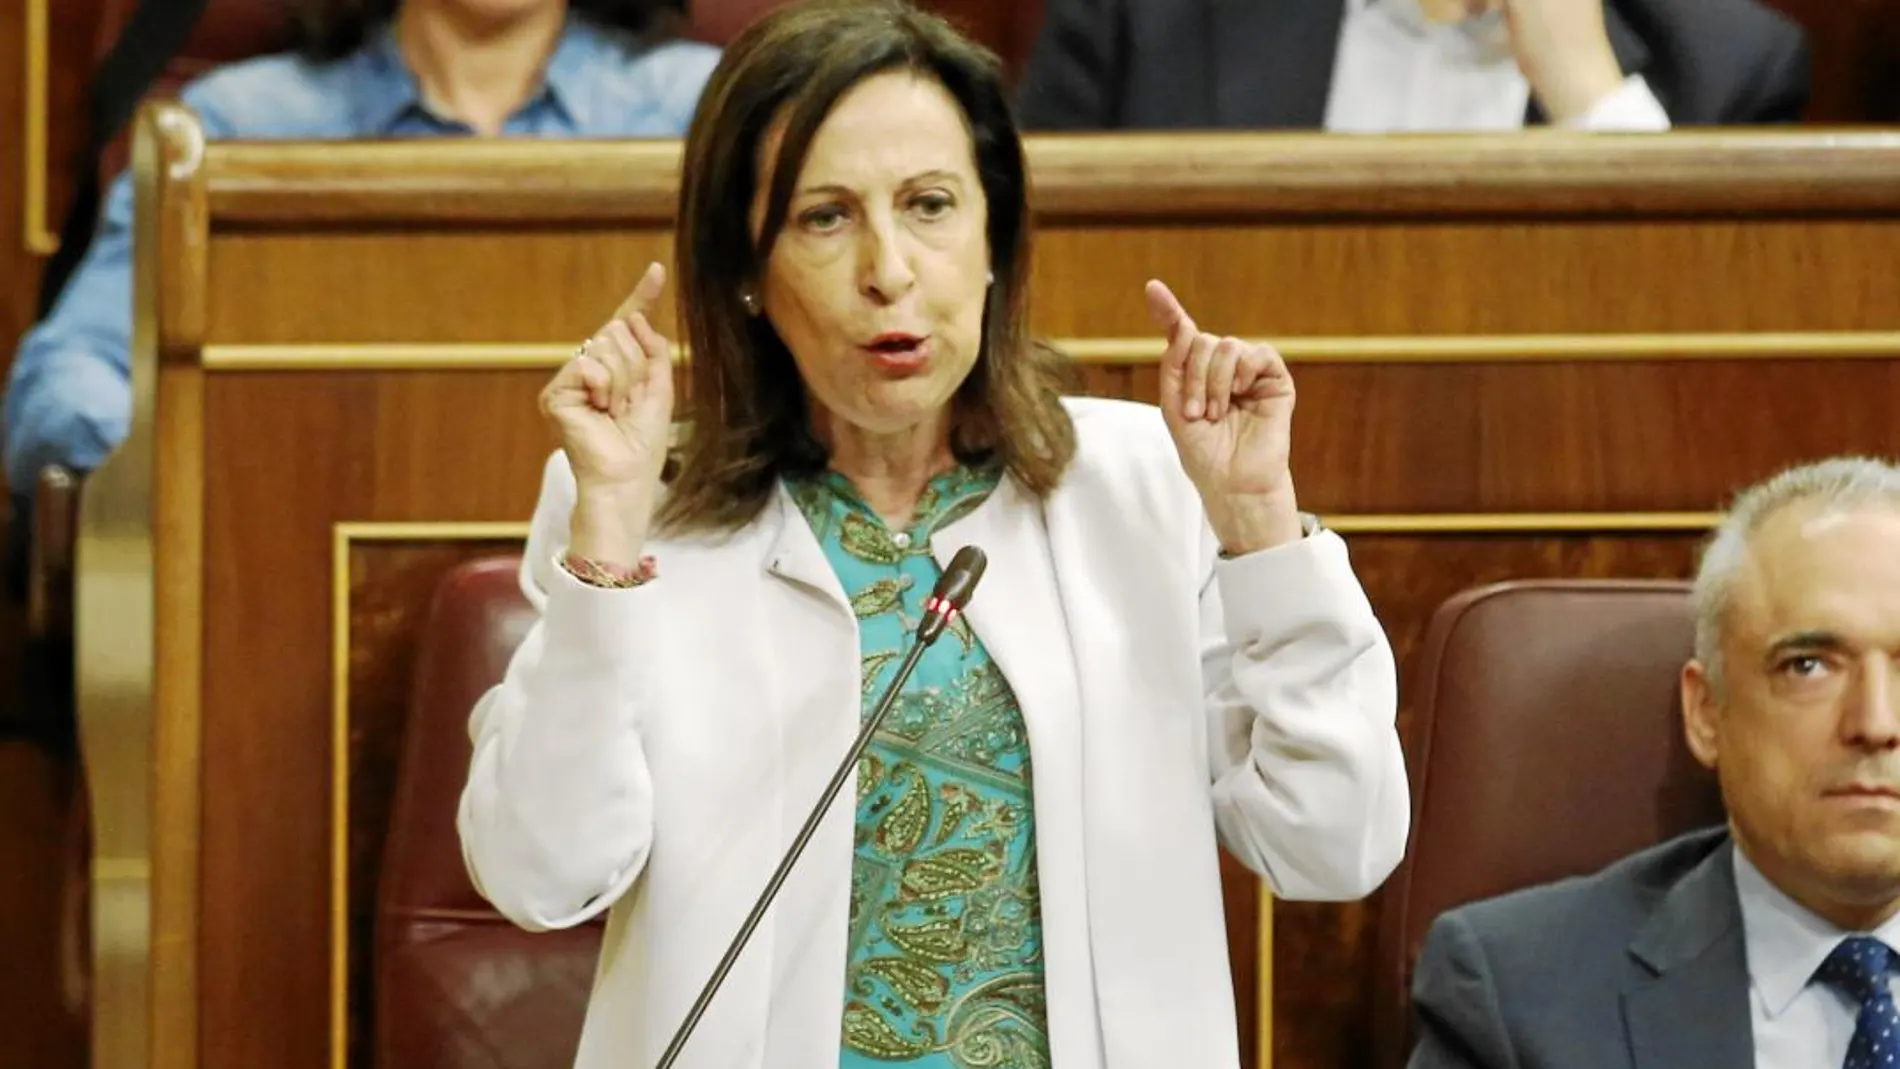 La portavoz parlamentaria del PSOE, Margarita Robles